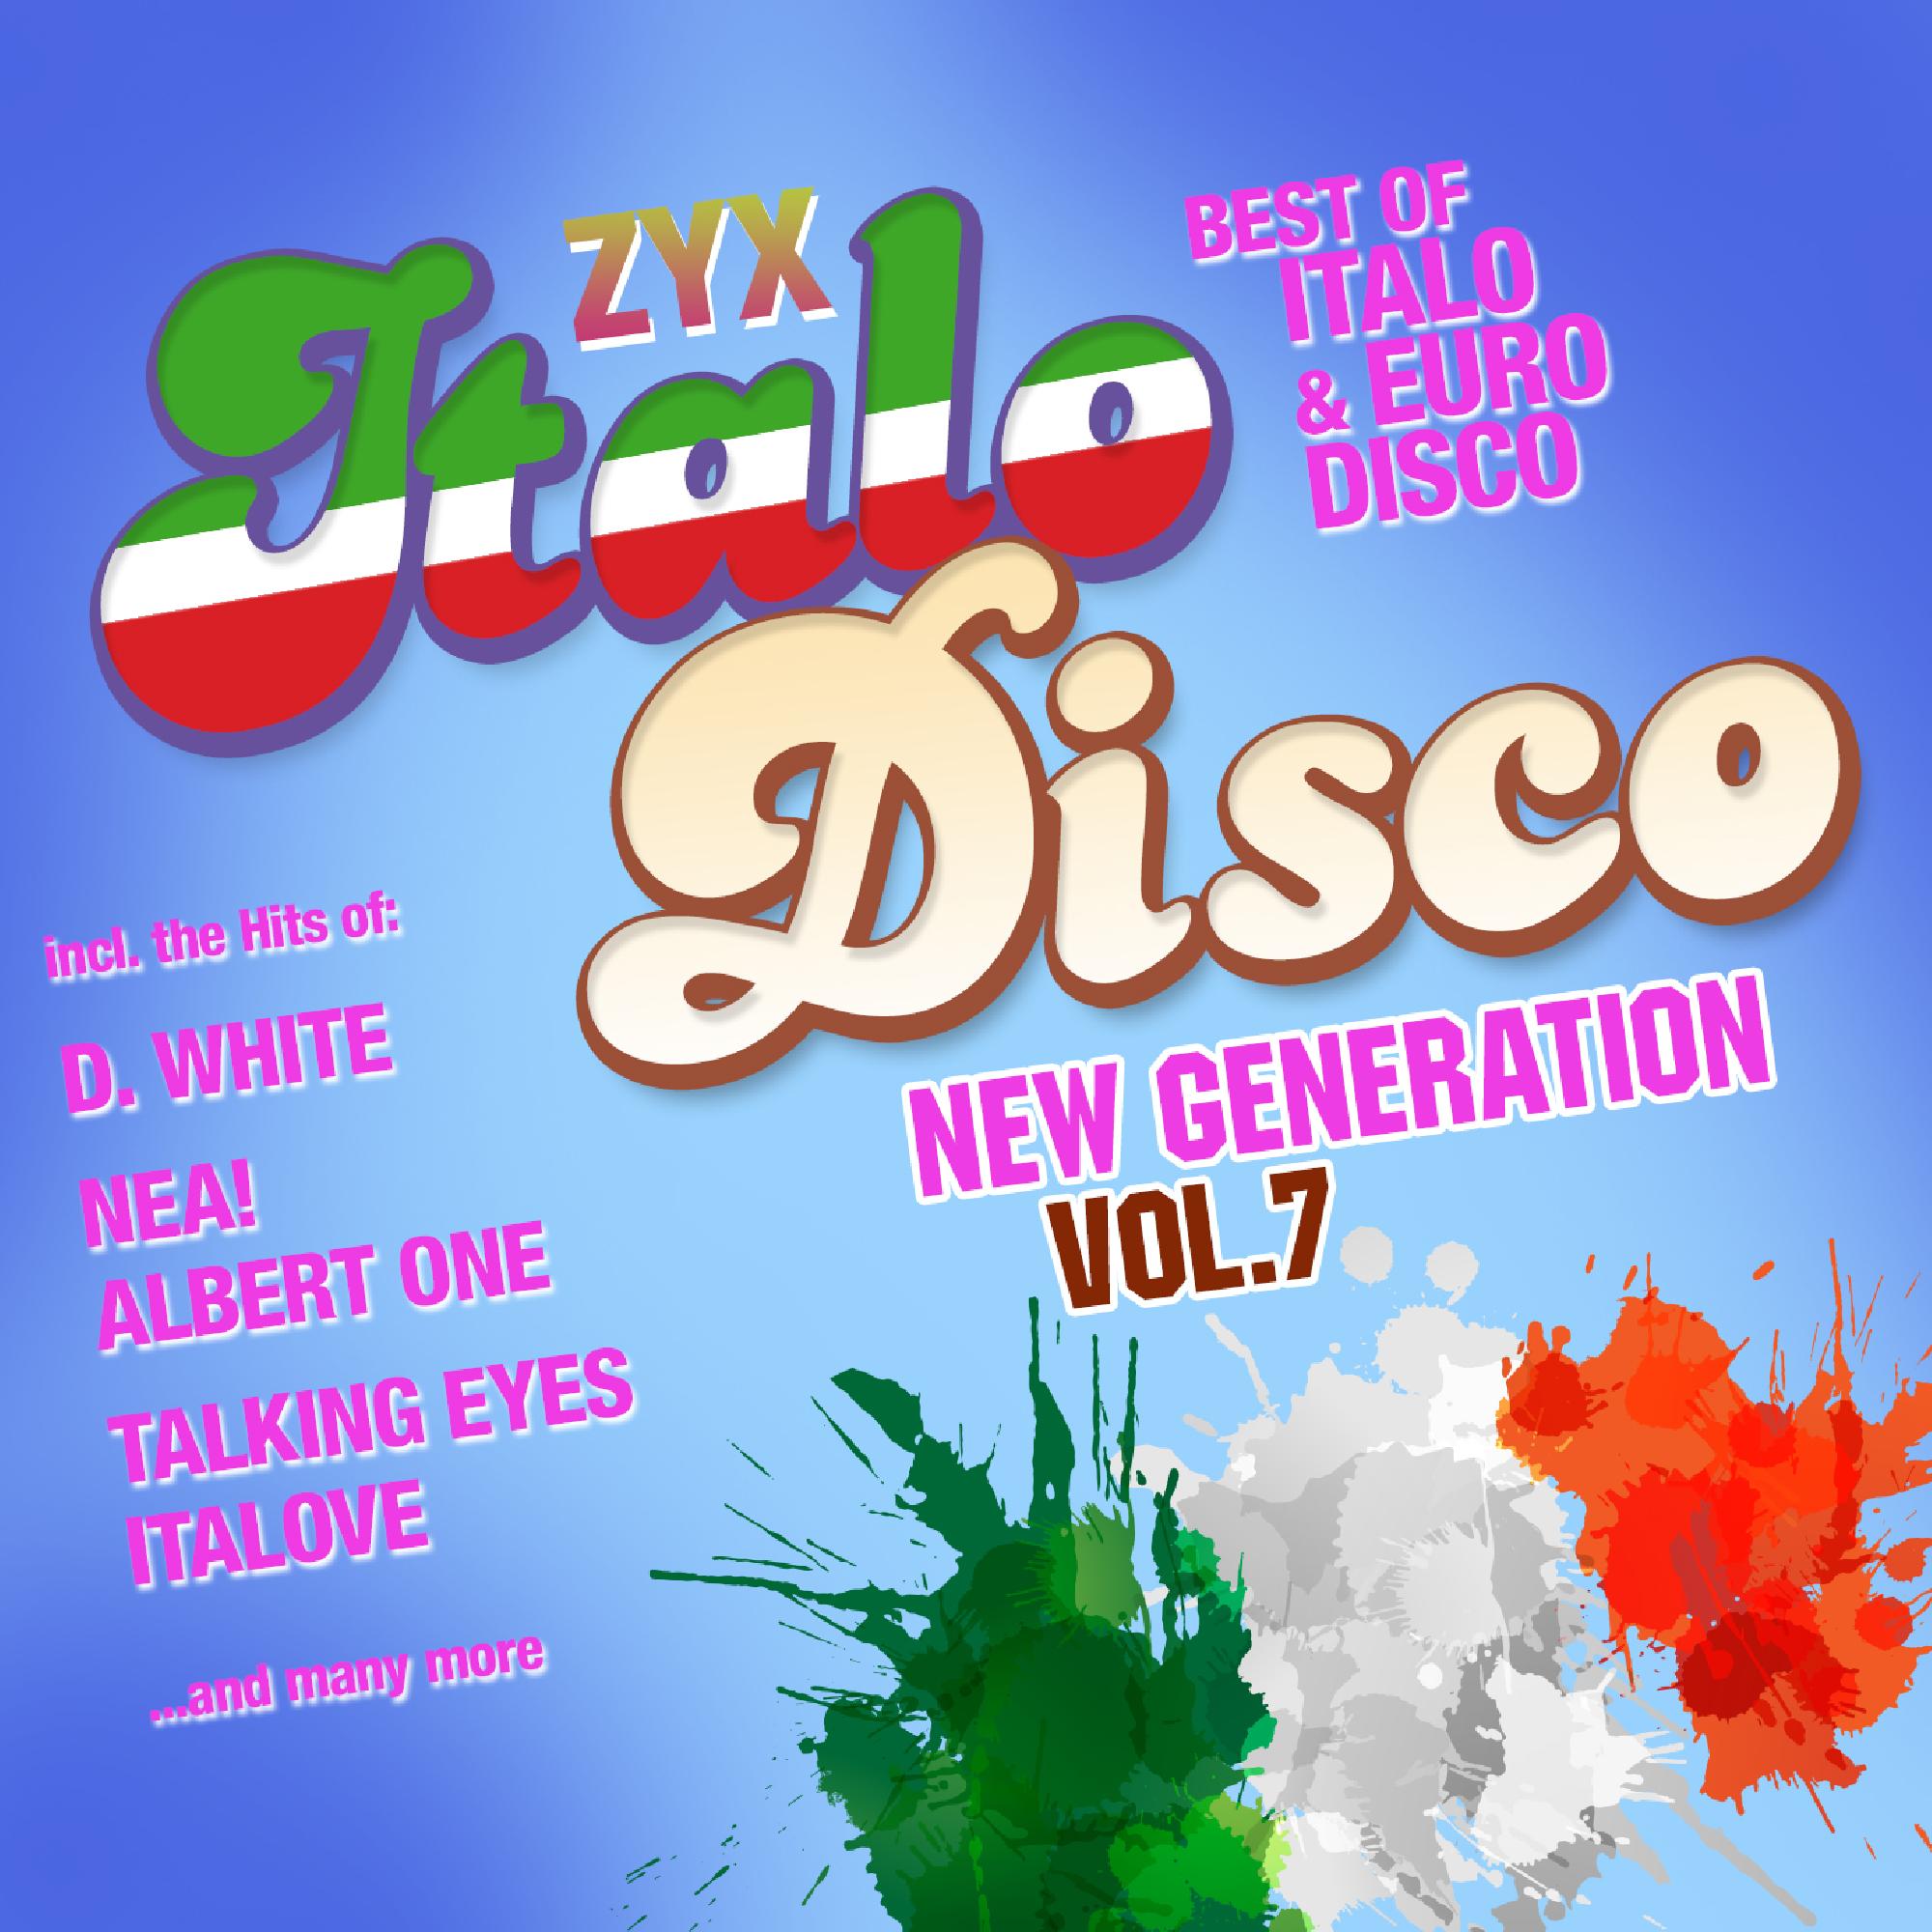 Zyx italo disco new generation vol 24. ZYX Italo Disco New Generation Vol 7 CD 1. ZYX Italo Disco New Generation Vol 7 CD 2. ZYX Italo Disco New. Va - ZYX Italo Disco New Generation 20.